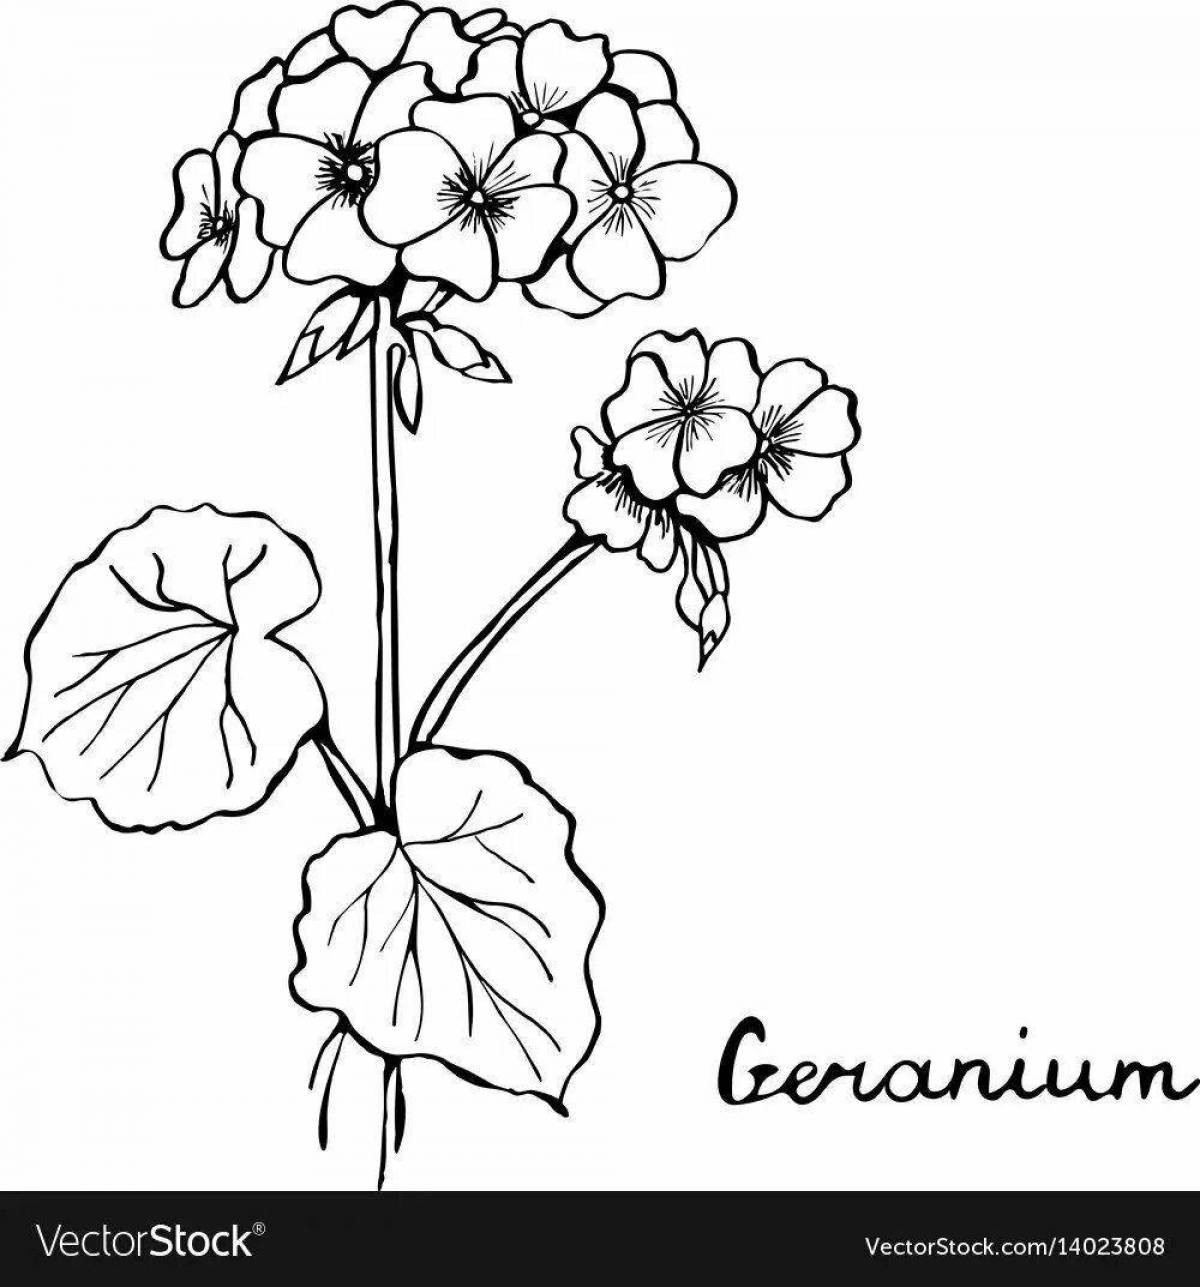 Delightful geranium coloring book for kids